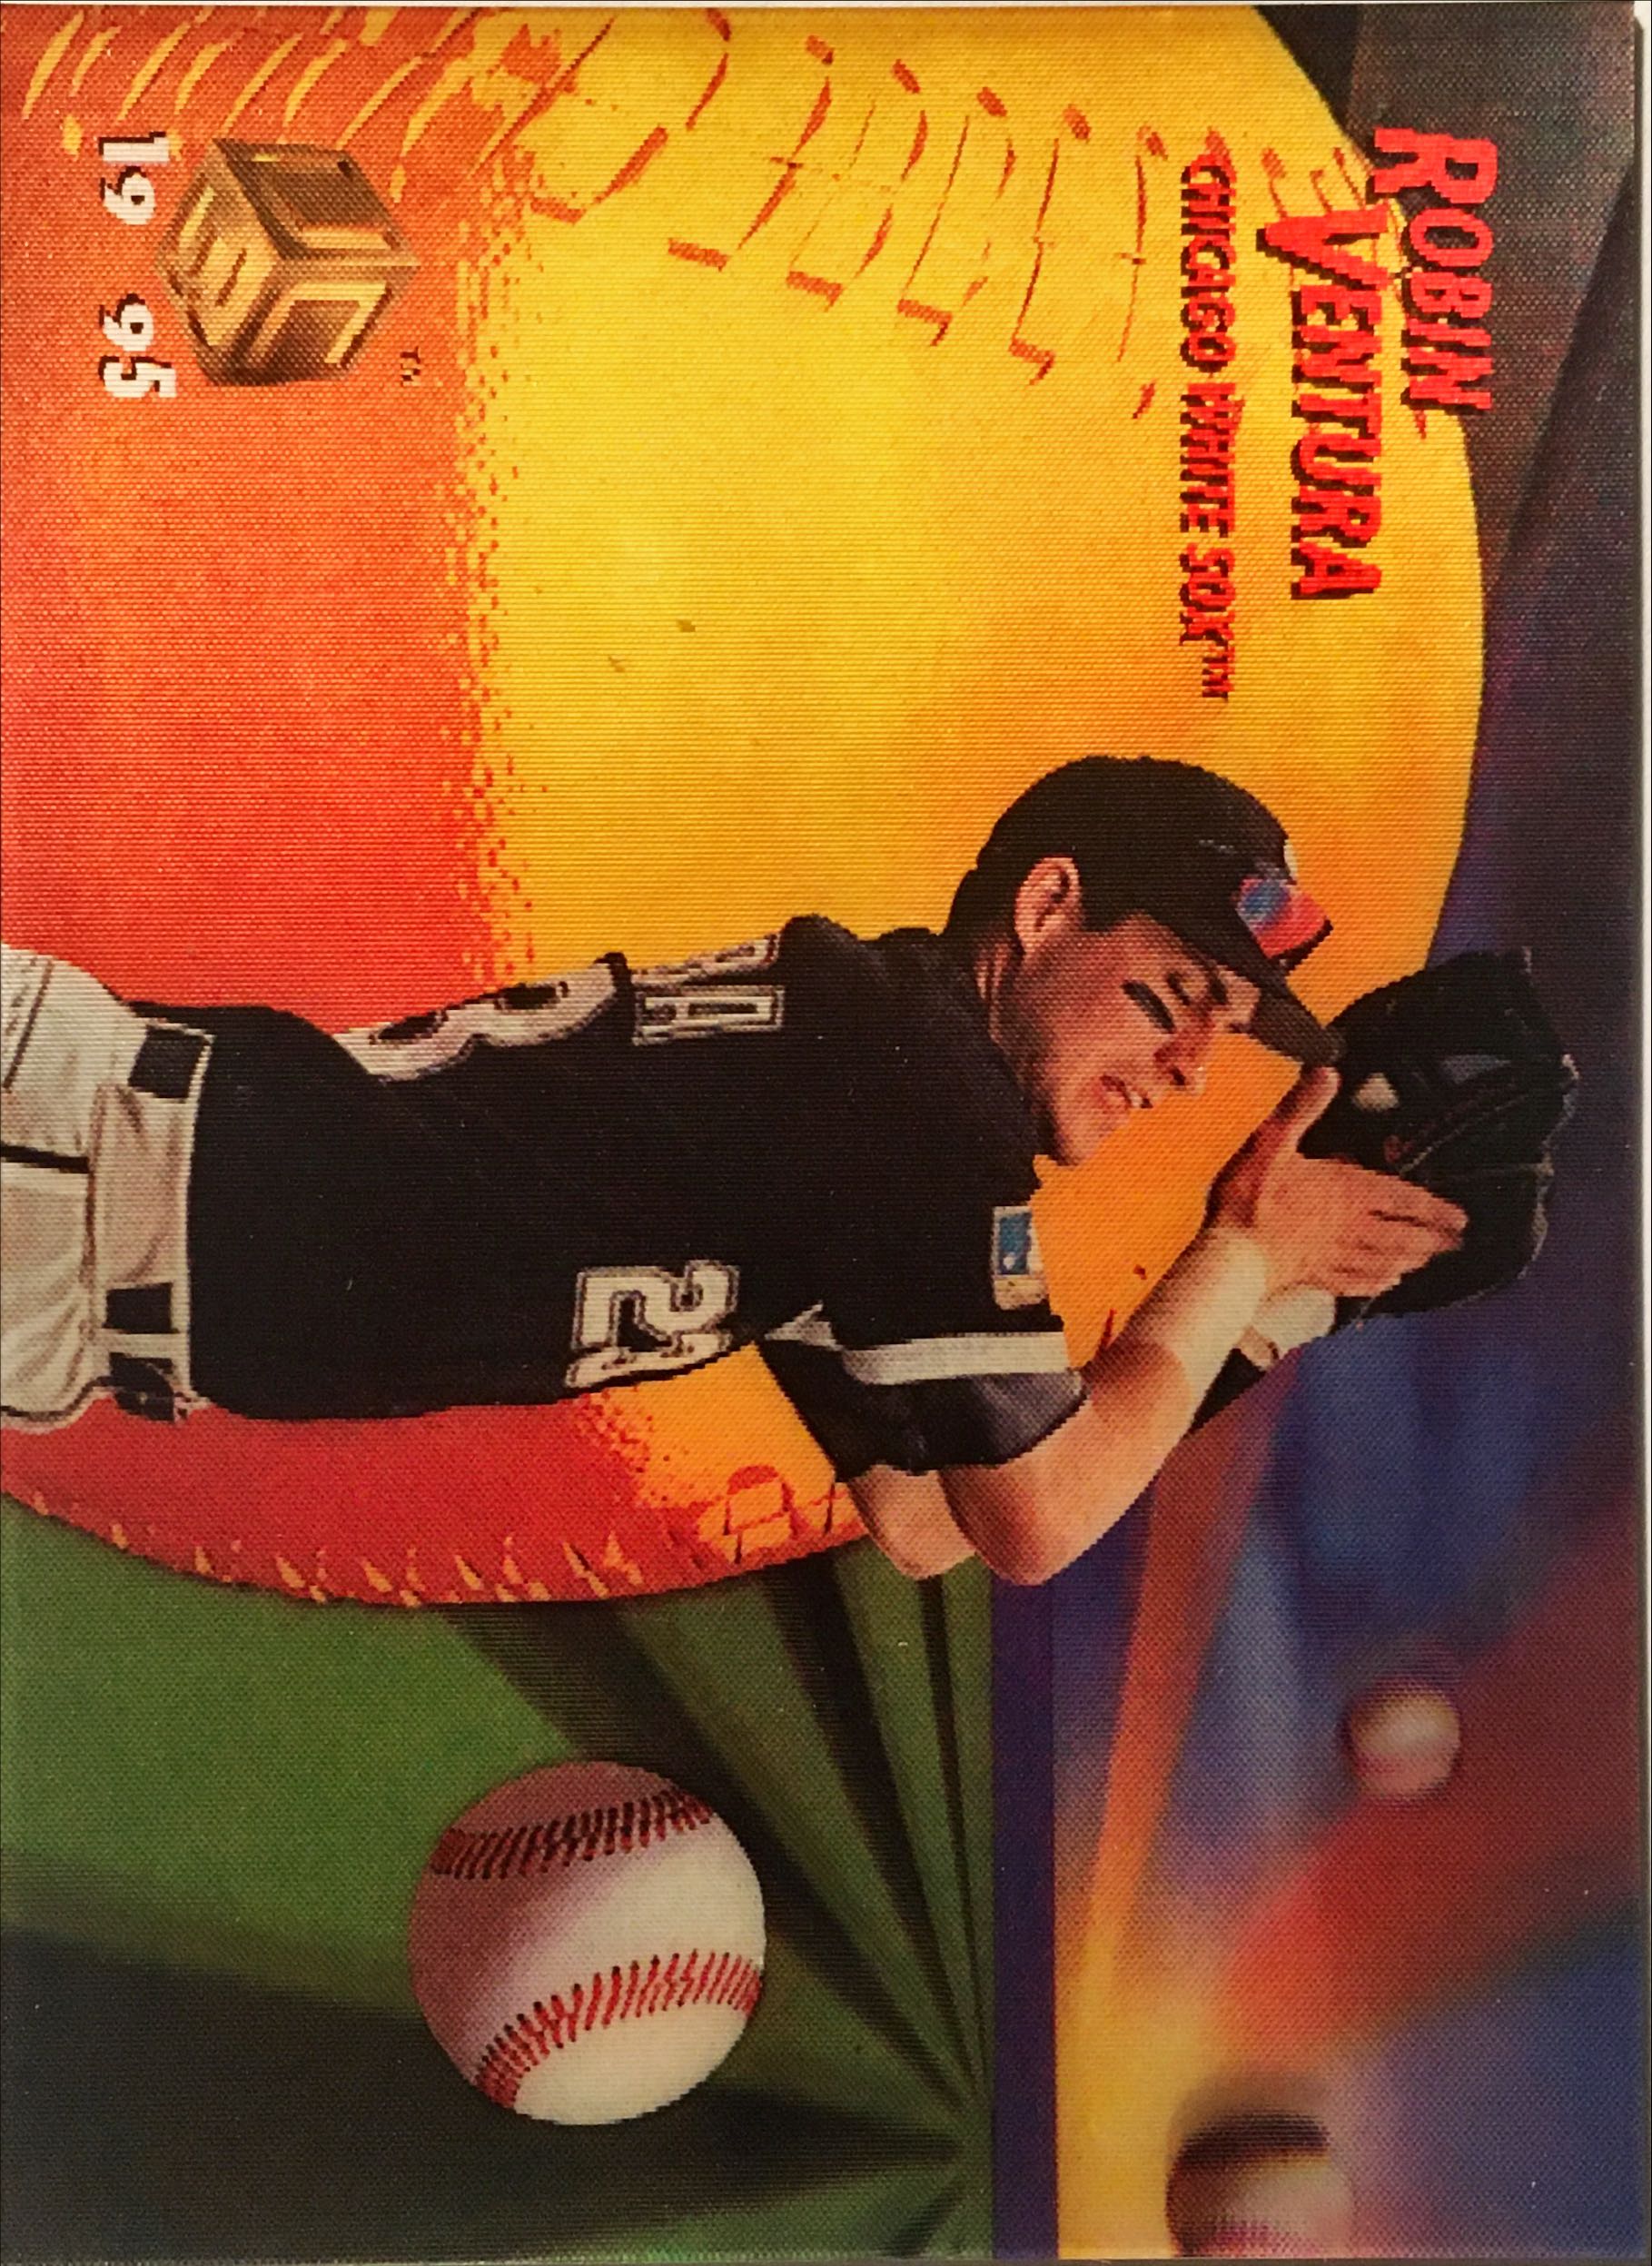 1995 Sportsflics UC3 53 front image